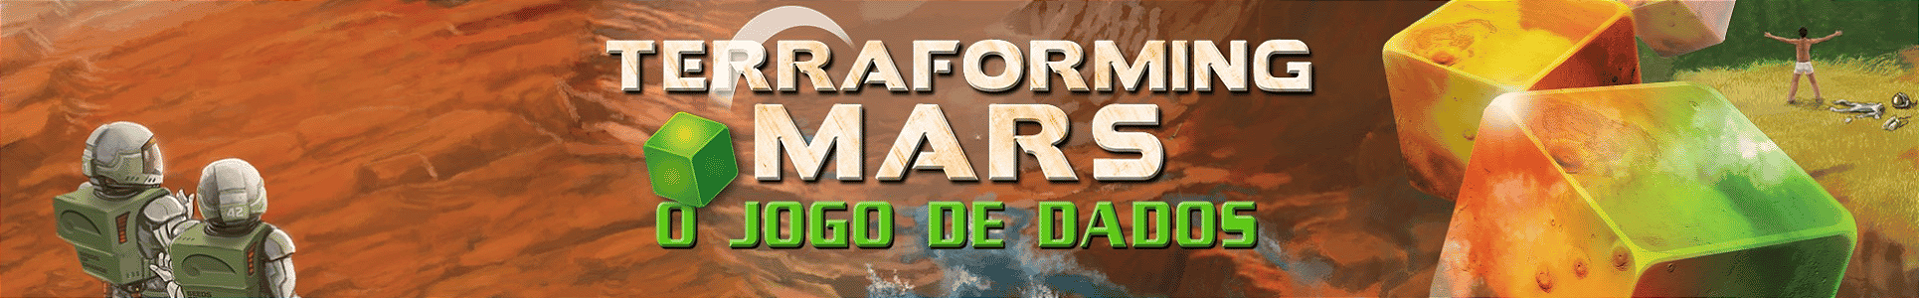 Terraforming Mars: o jogo de dados